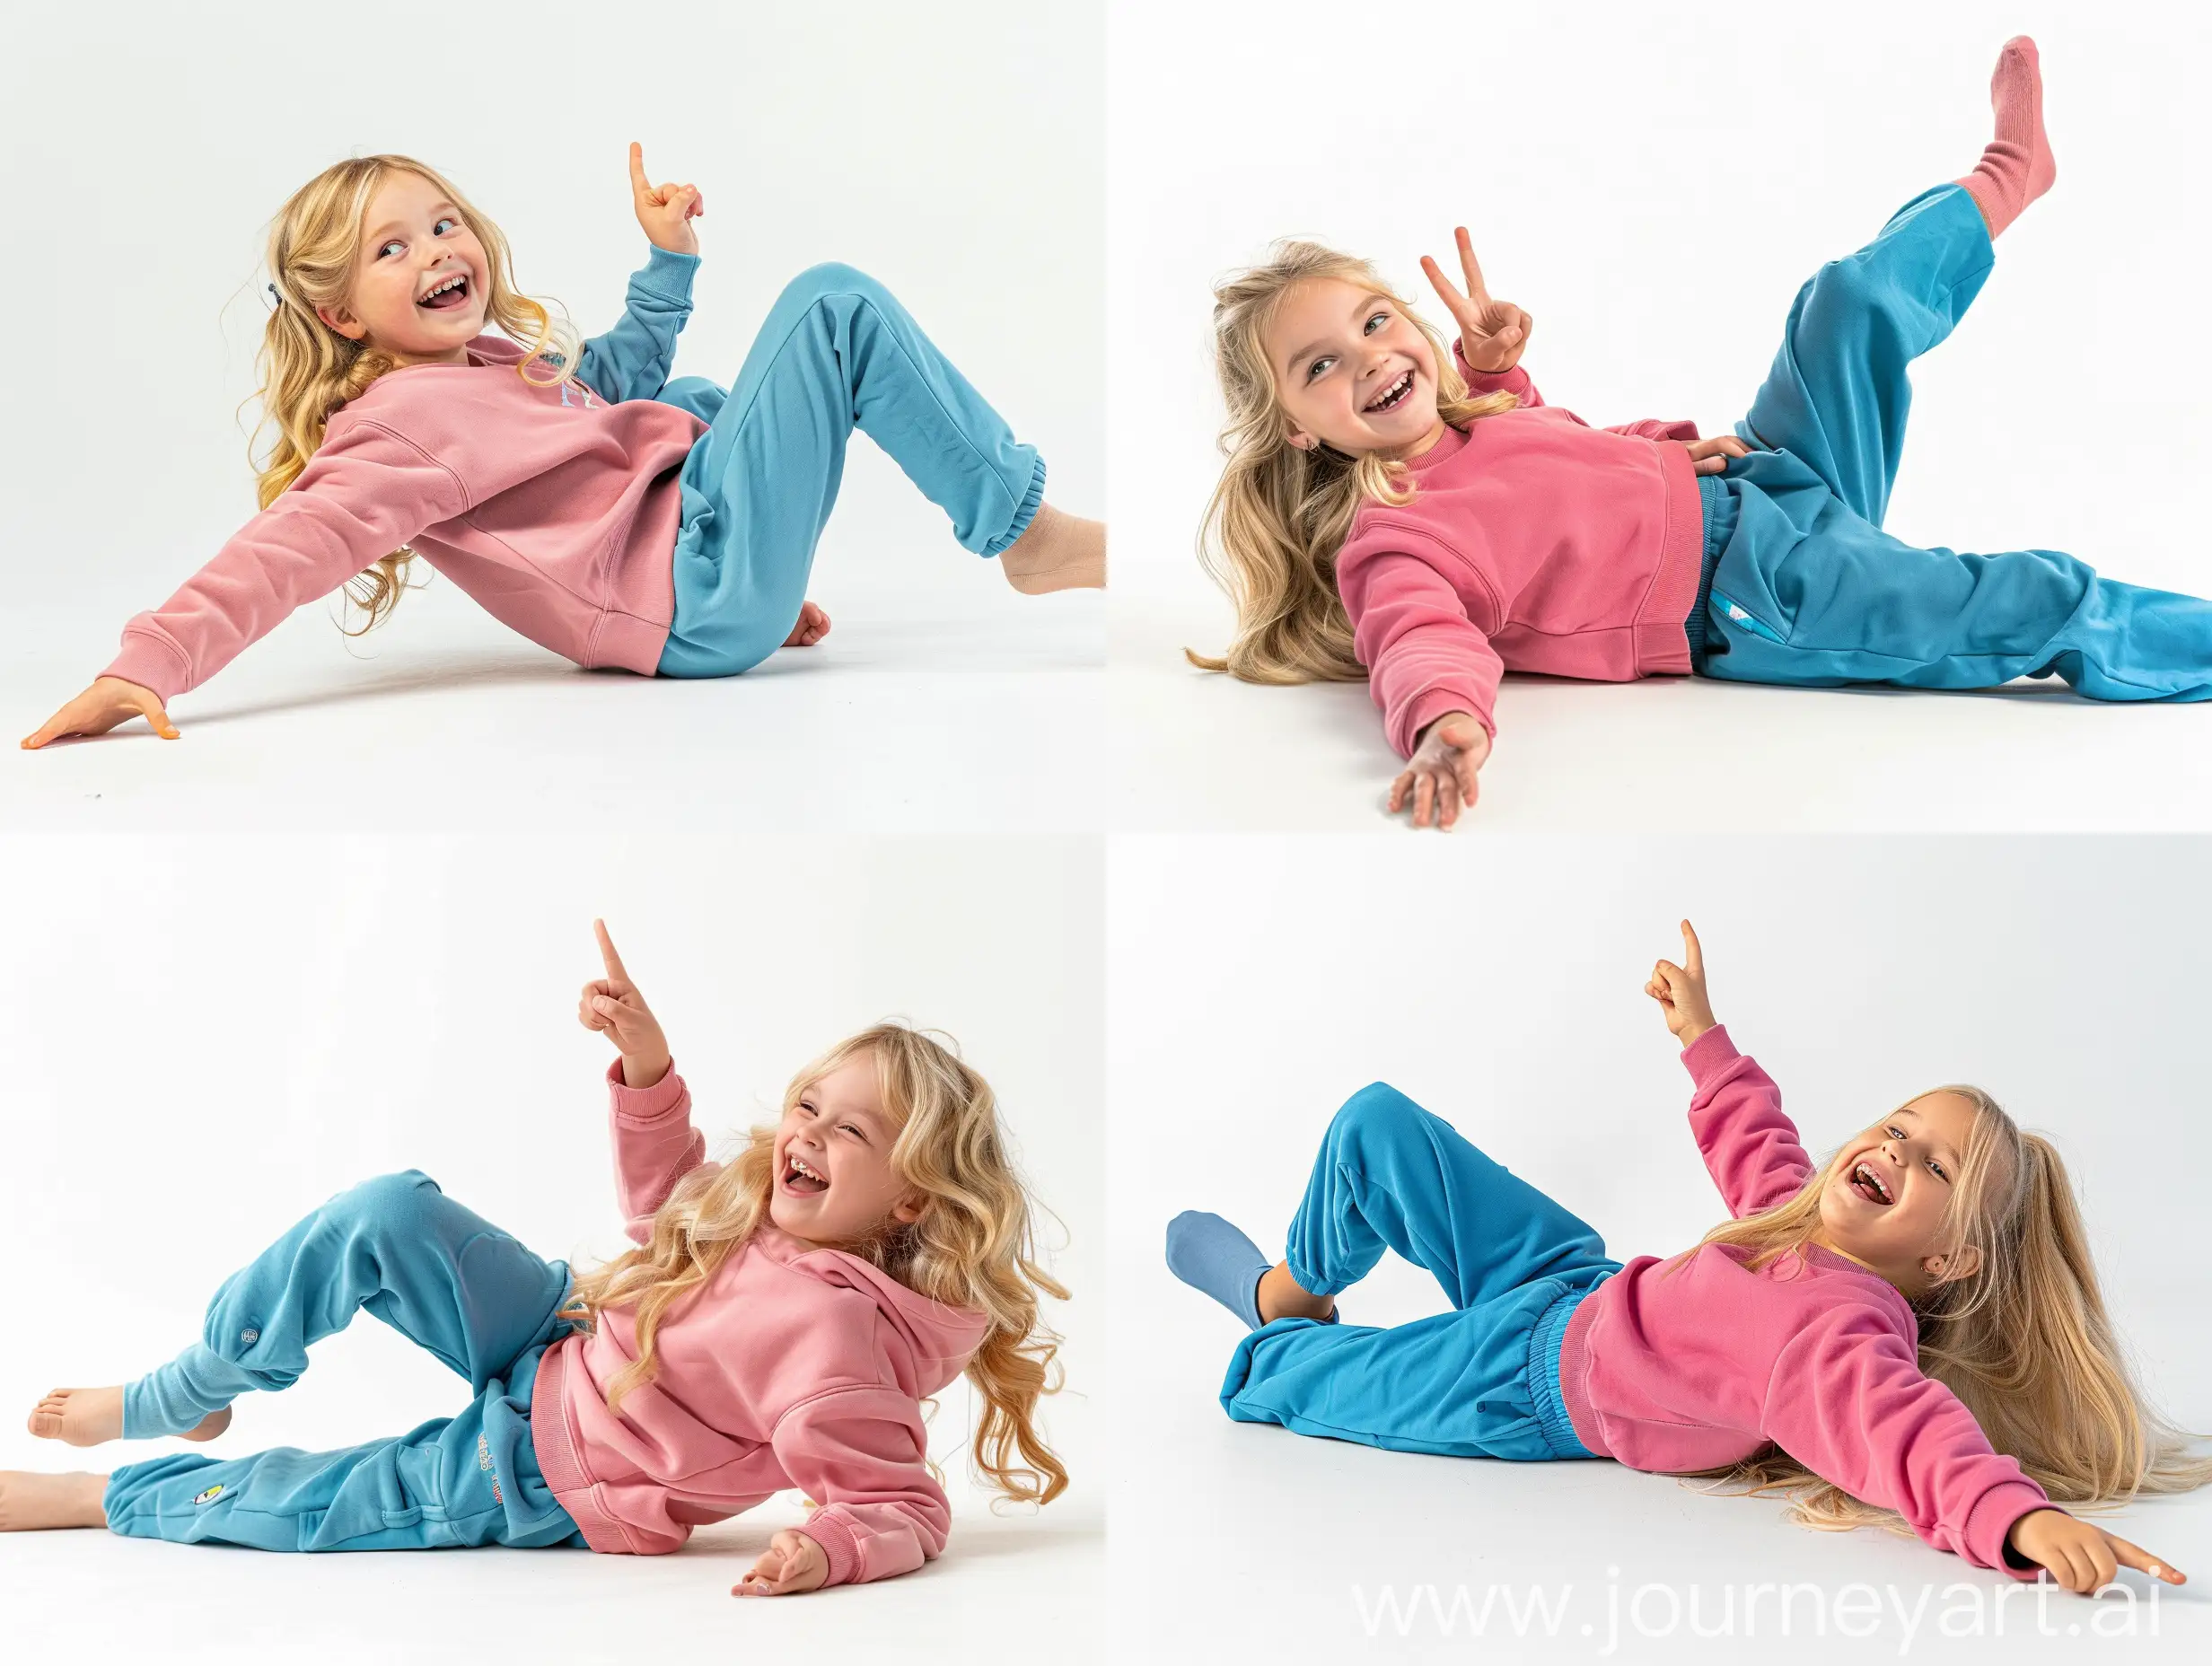 Blonde-Girl-in-BarbiePink-Sweatshirt-Points-Up-with-Joyful-Expression